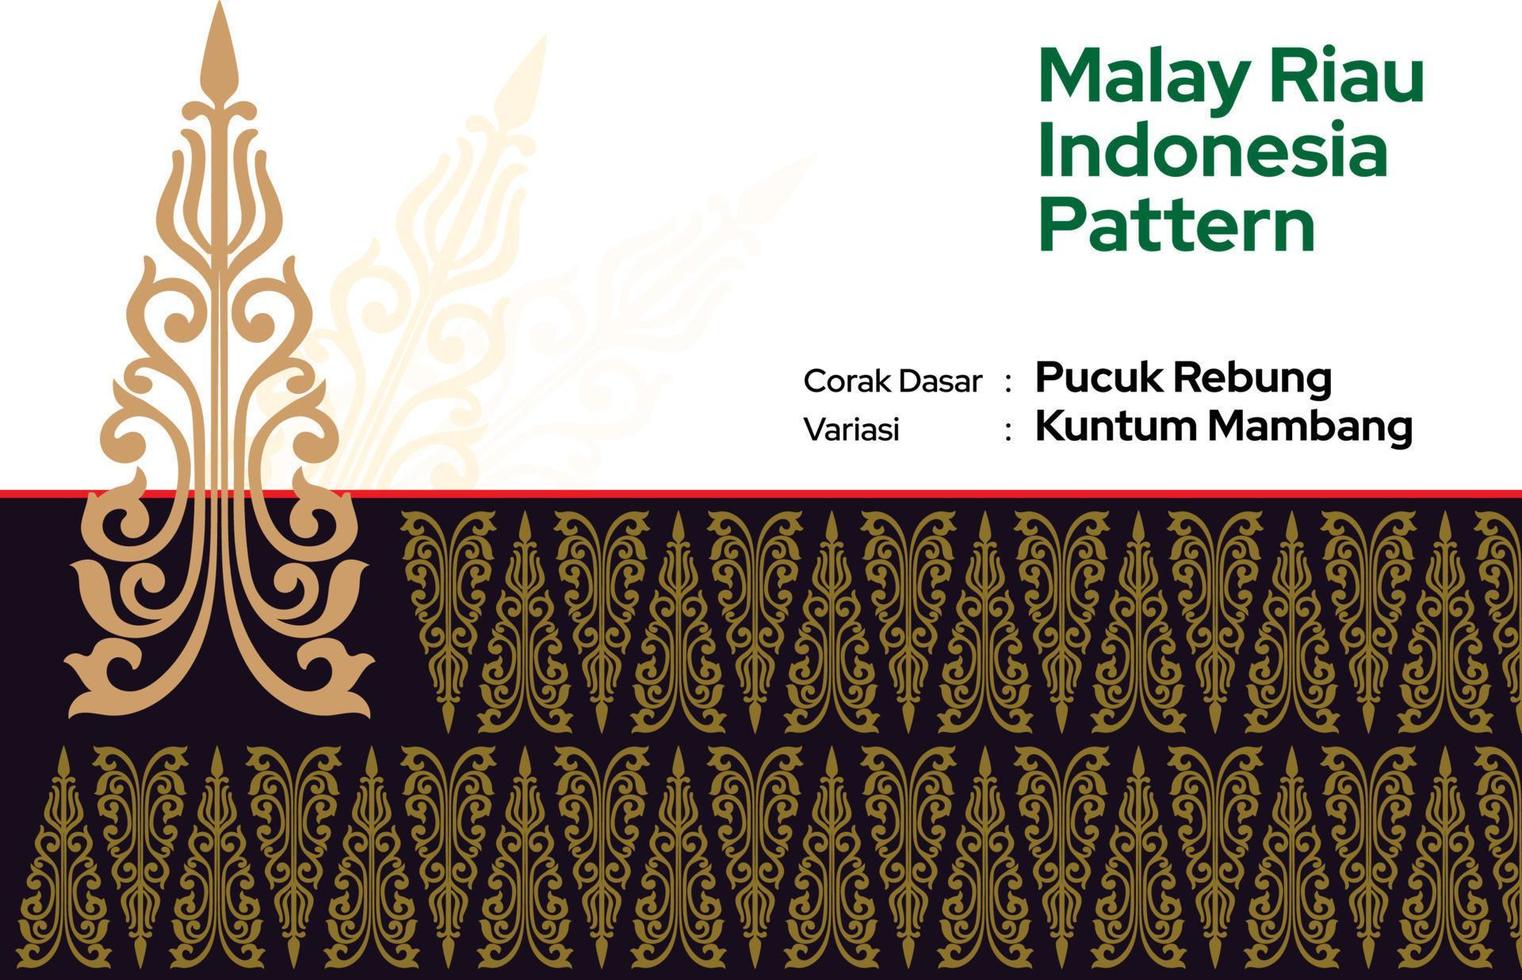 Pattern Malay Riau Batik Songket Tenun, Weaving Corak Motif Pucuk Rebung Kuntum Mambang Melayu patterns, Traditional Classic handwoven black with gold threads vector